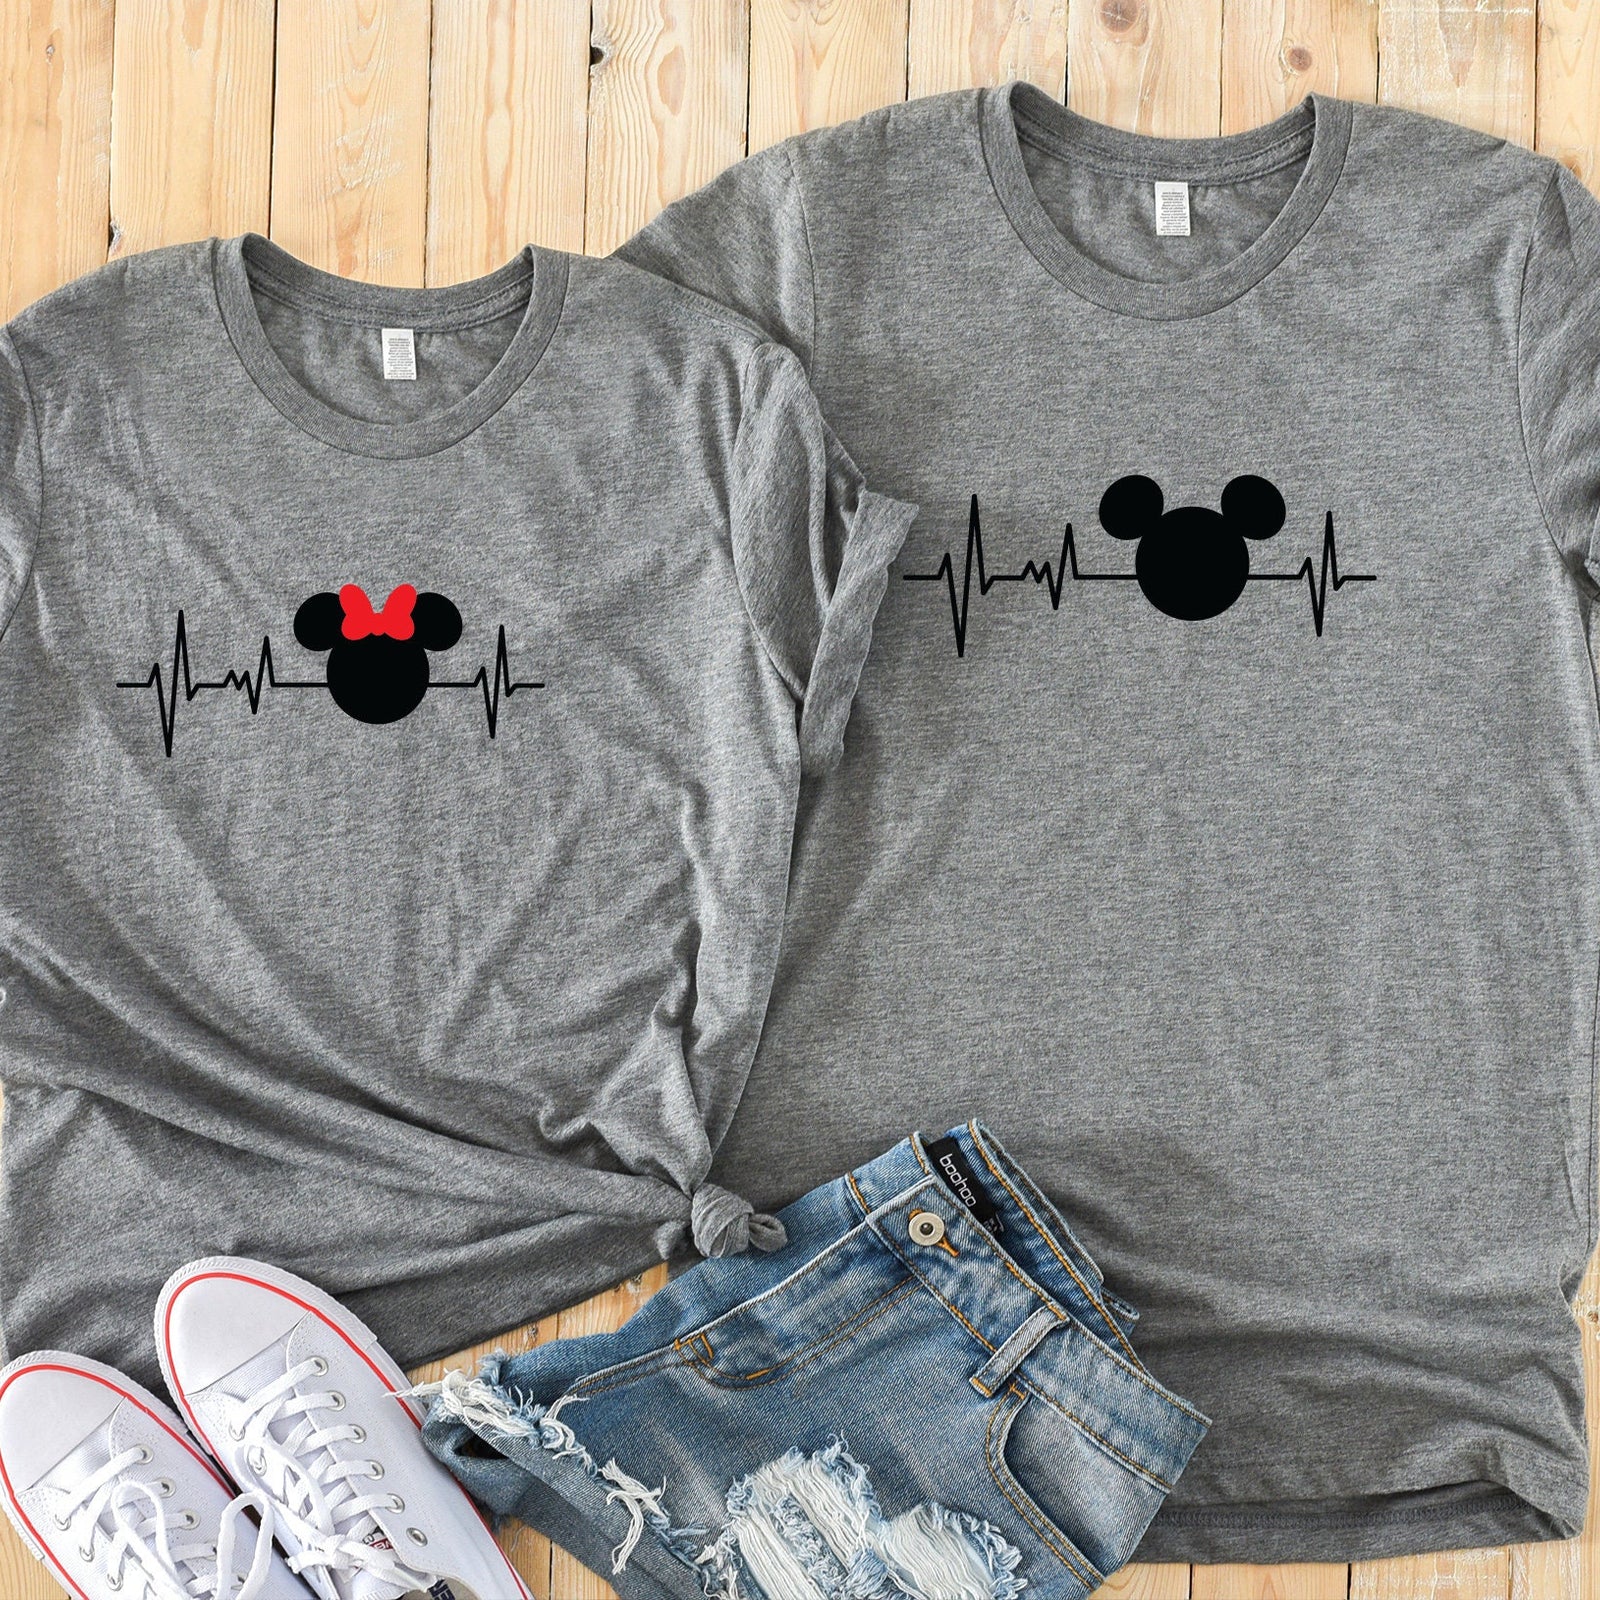 Minnie and Mickey heartbeat Shirts - Disney Couples - Matching Shirts - I Love Disney Shirts